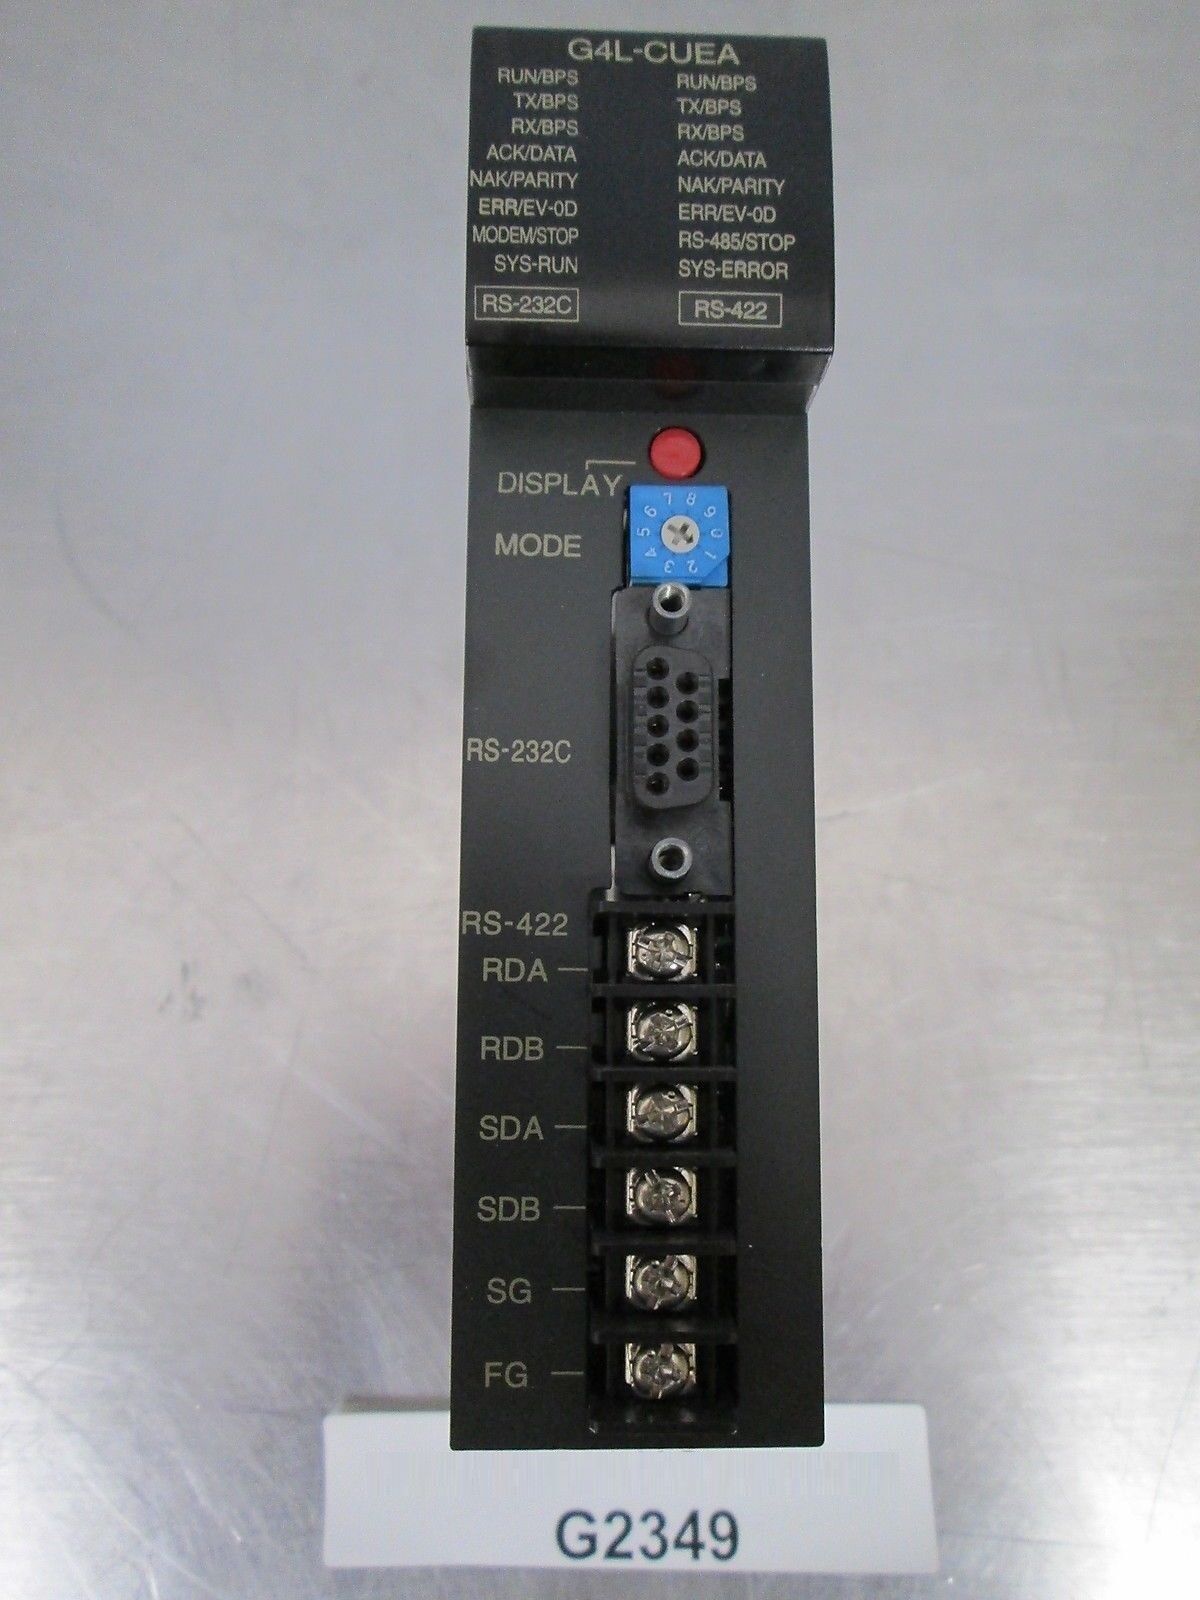 LG G4L-CUEA Controller